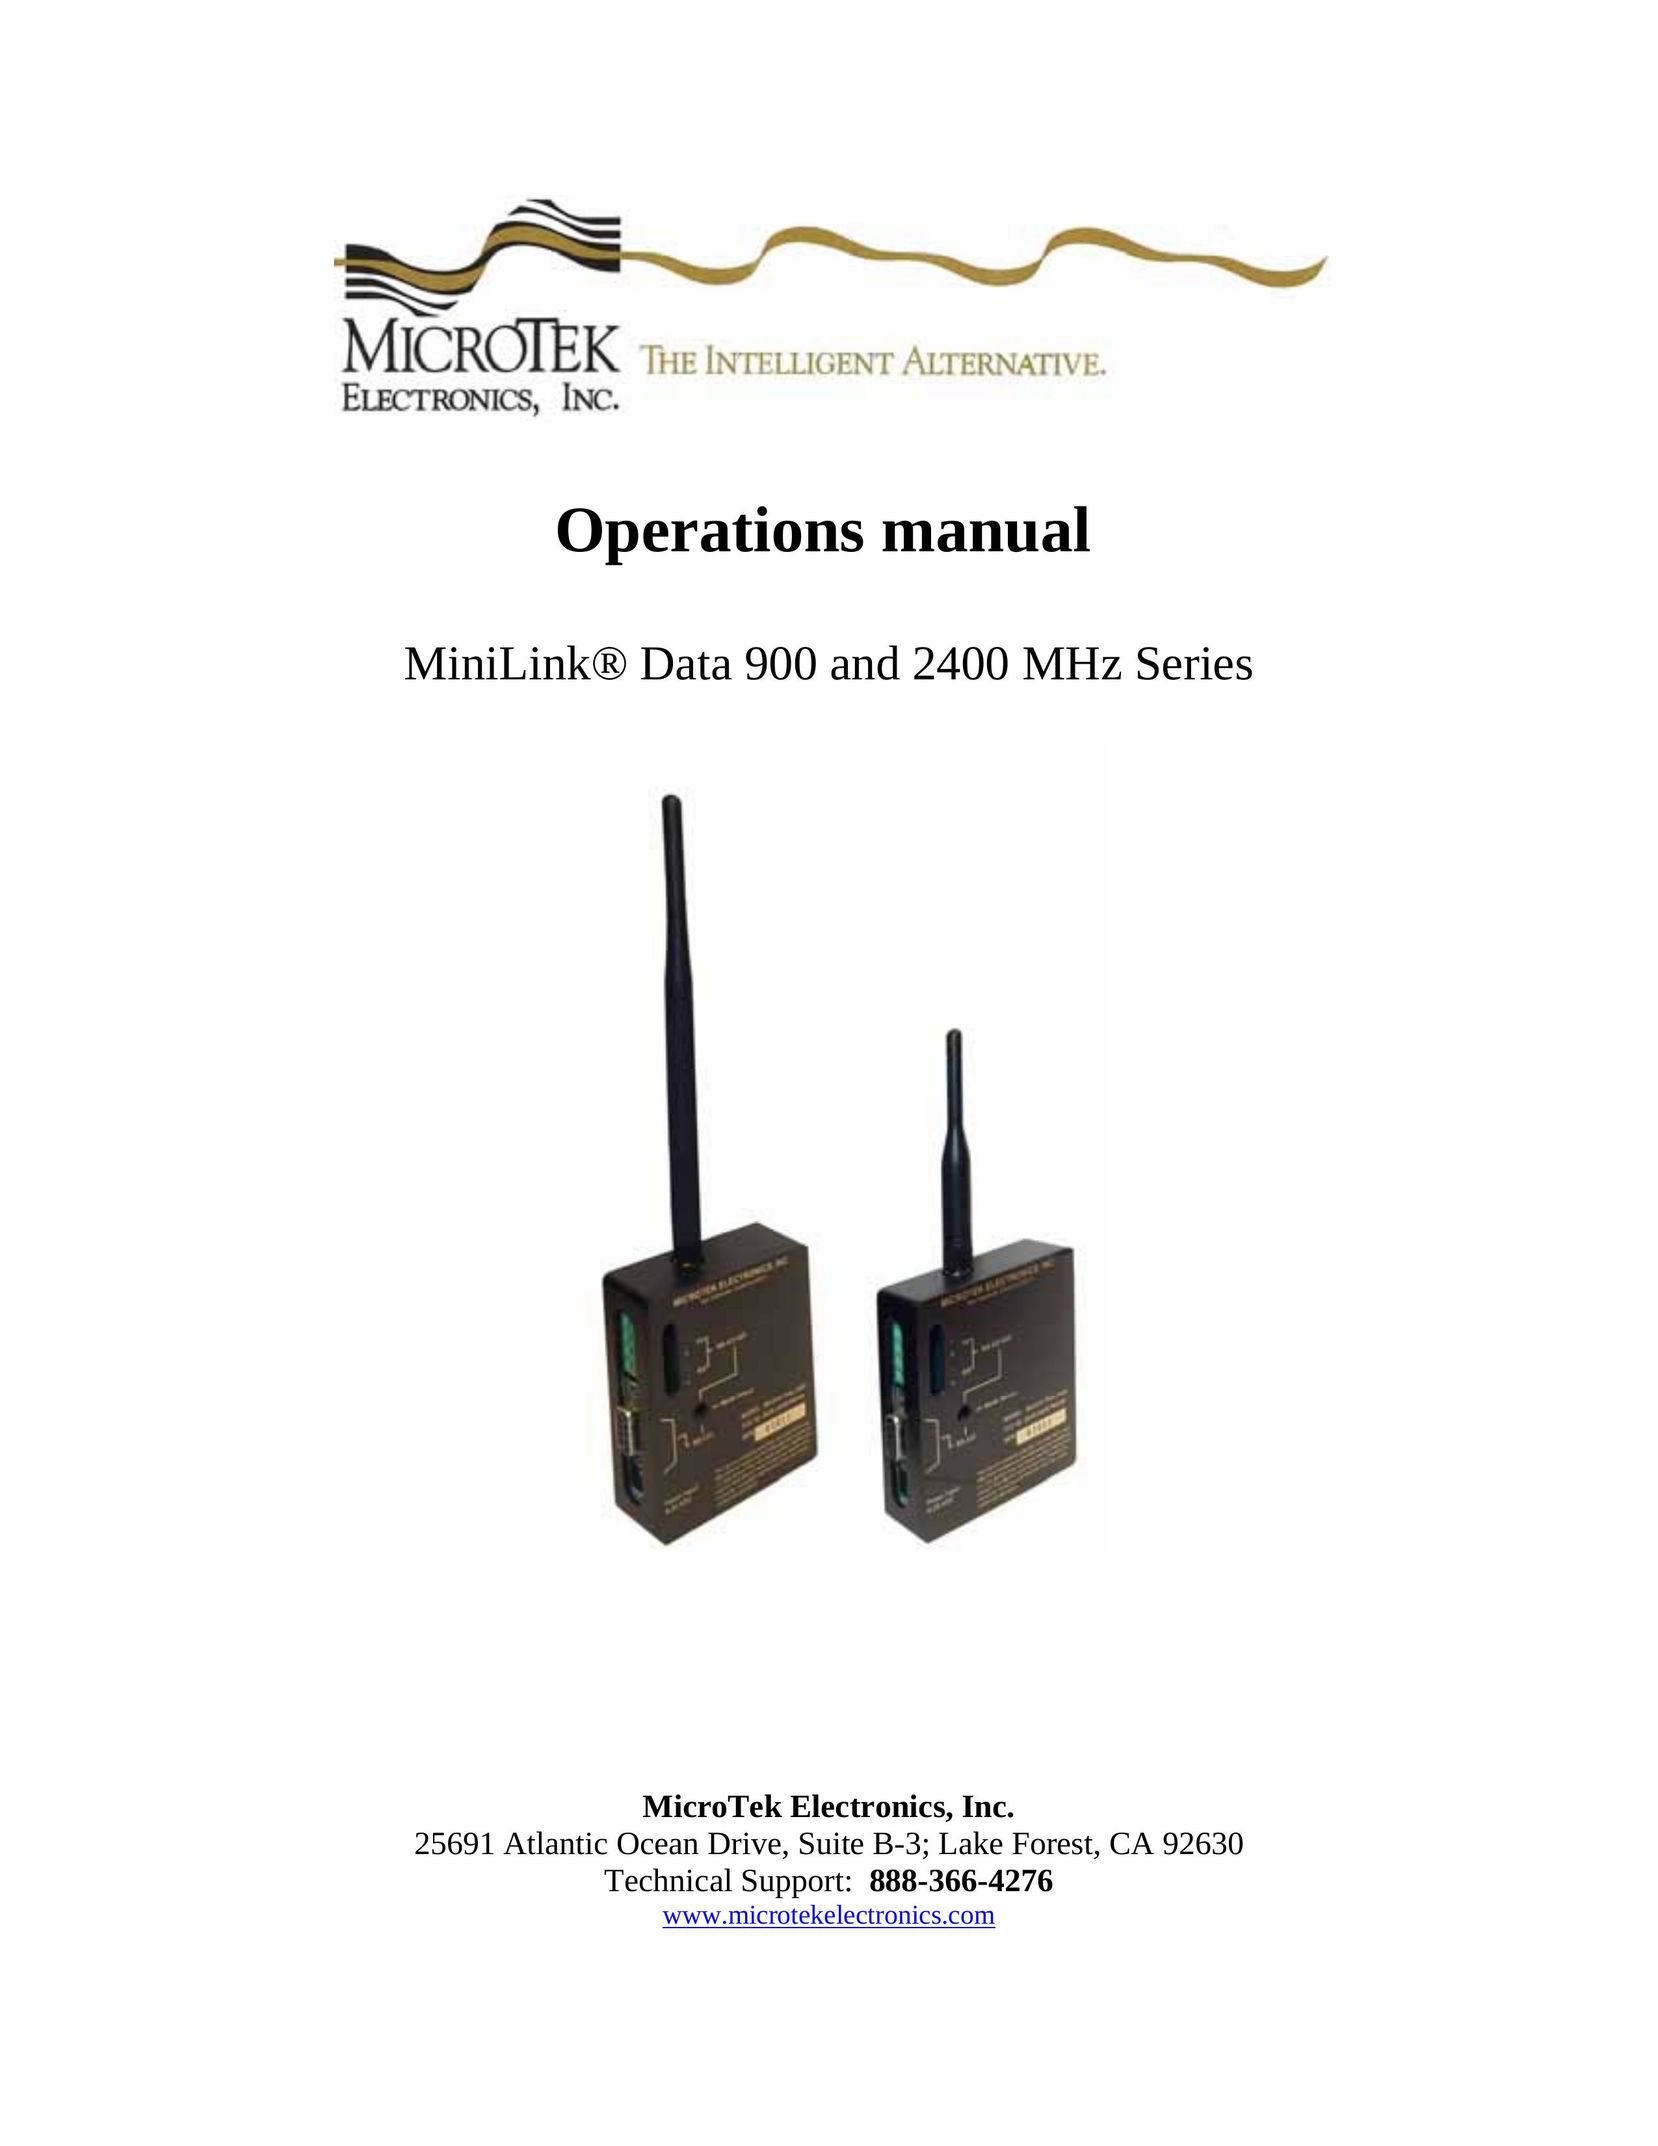 Microtek 900 MHz Series Two-Way Radio User Manual